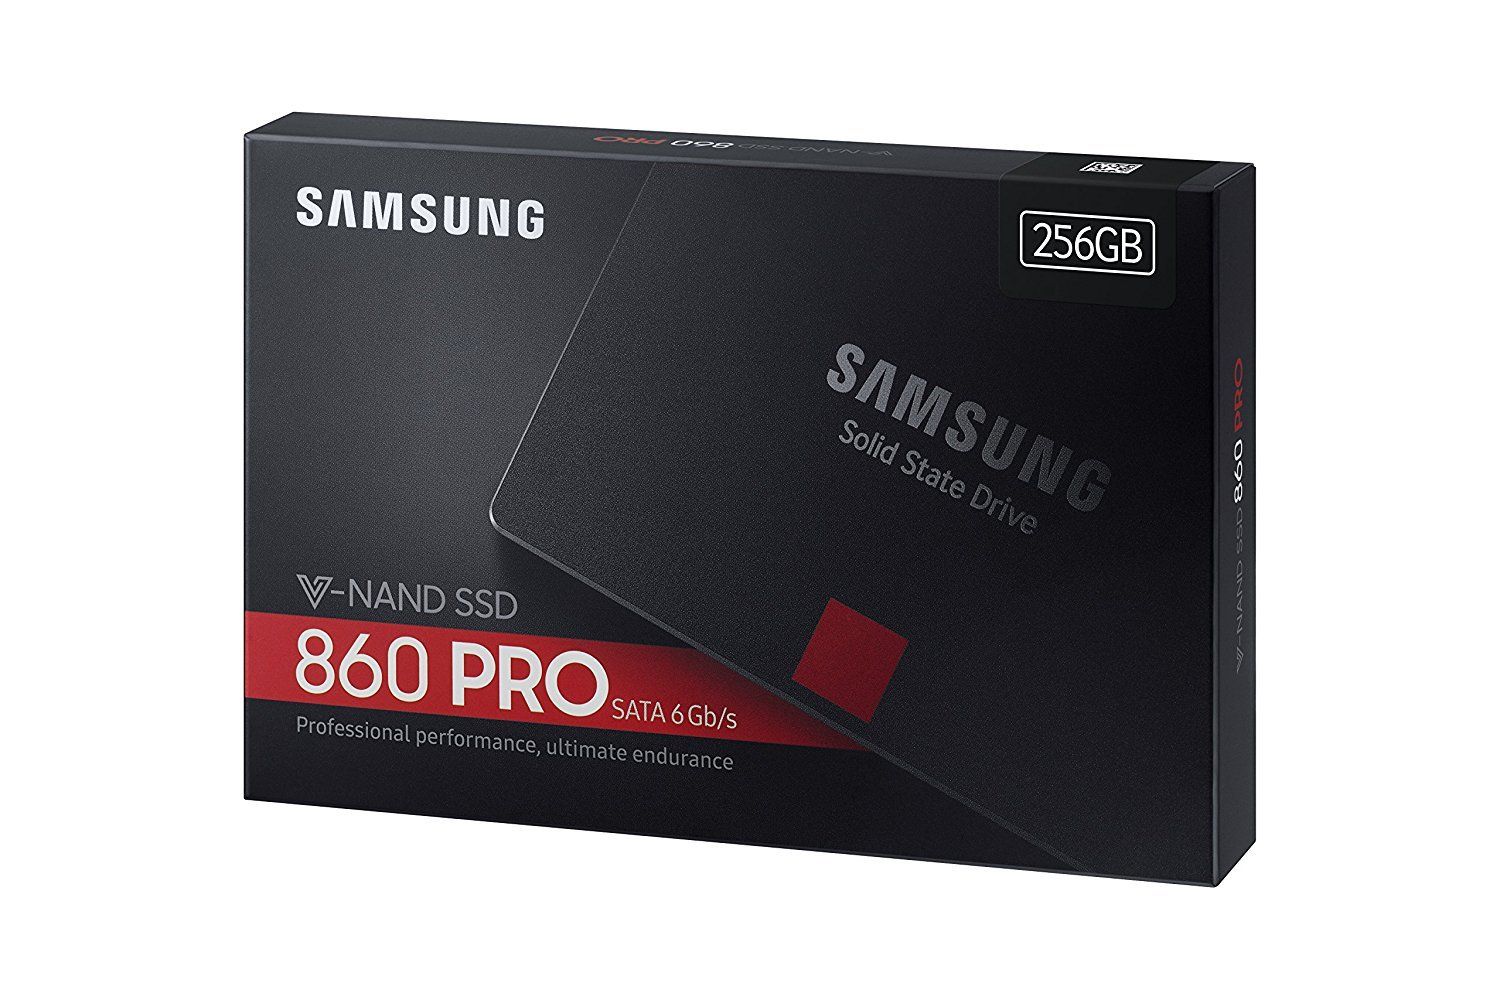  SSD Samsung 860 PRO 256GB 